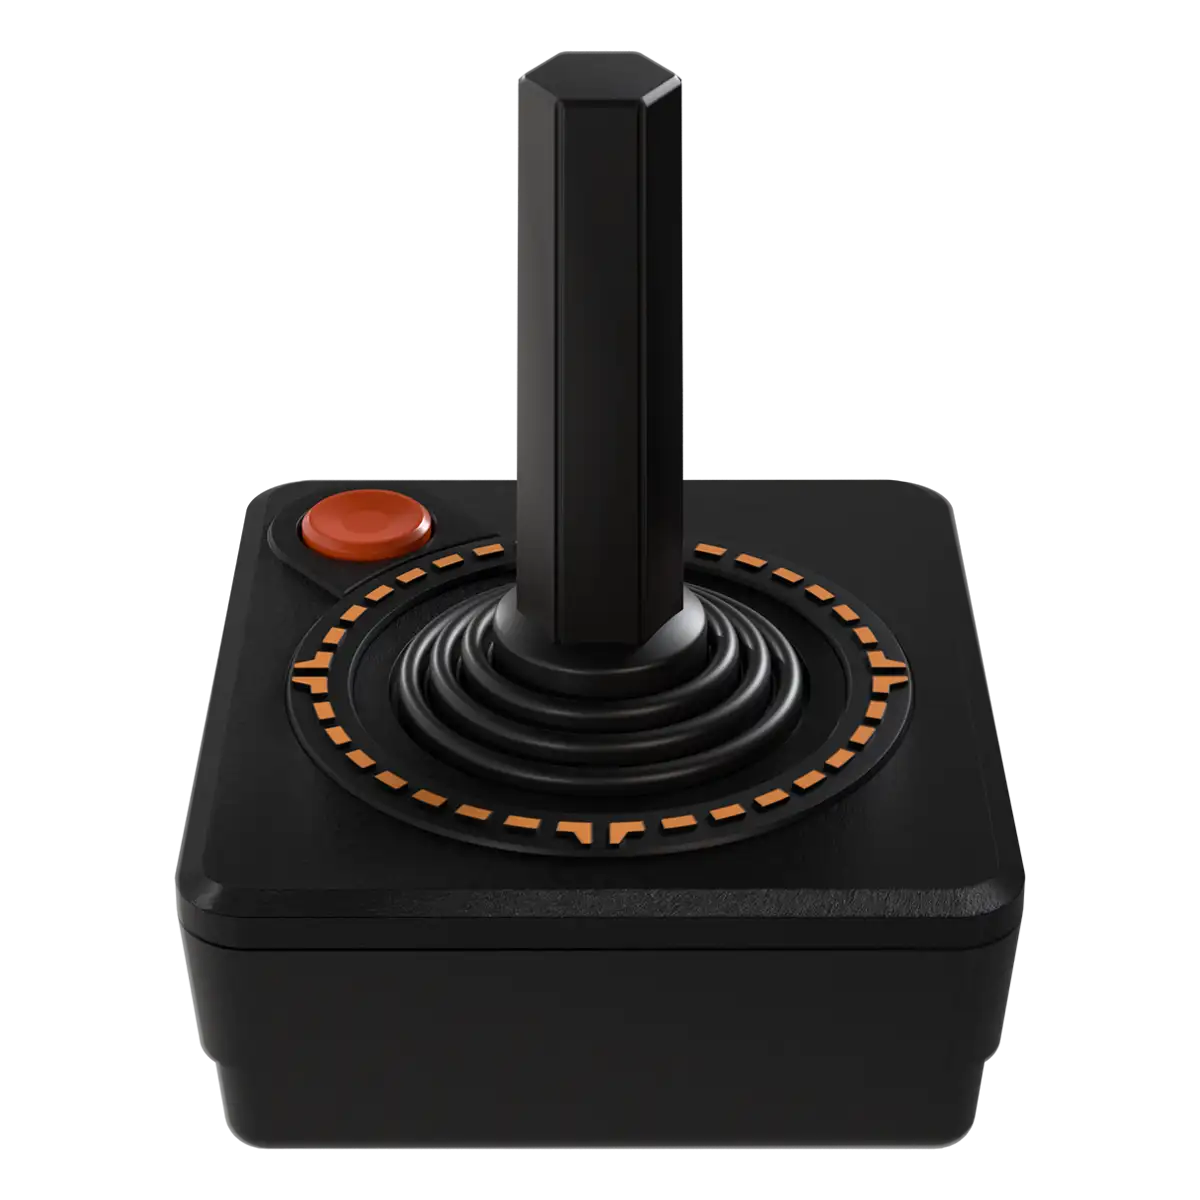 THECXSTICK (Solus Atari USB Joystick - Black) Image 4